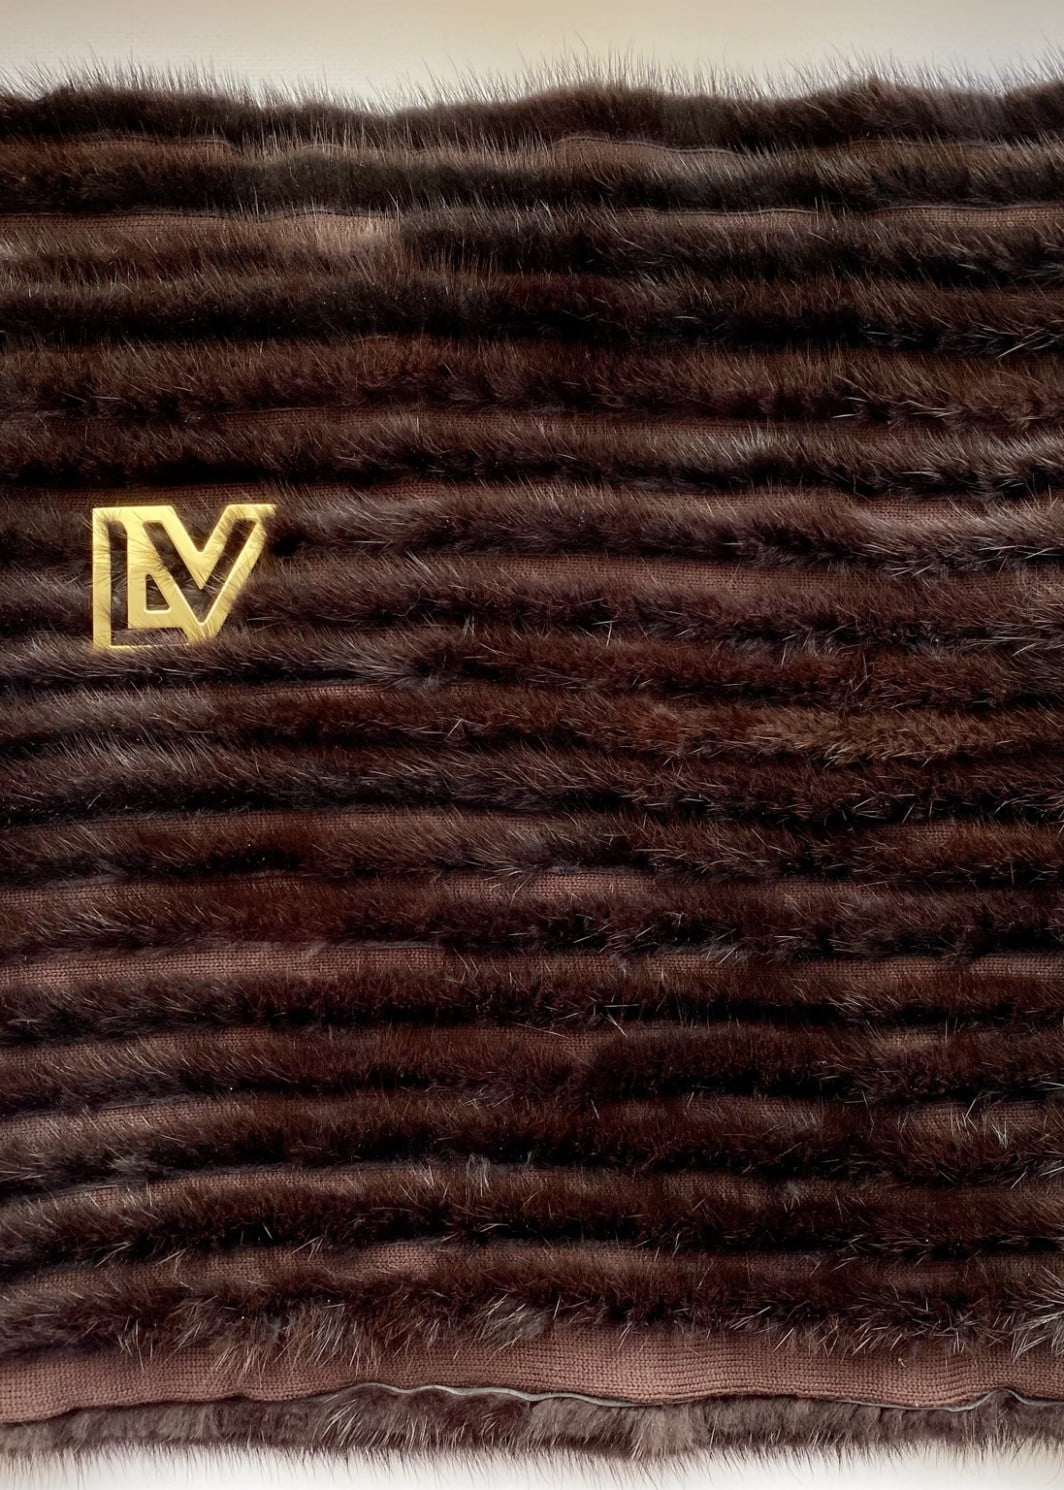 Скидка ❗ Louis Vuitton сумка Kensington